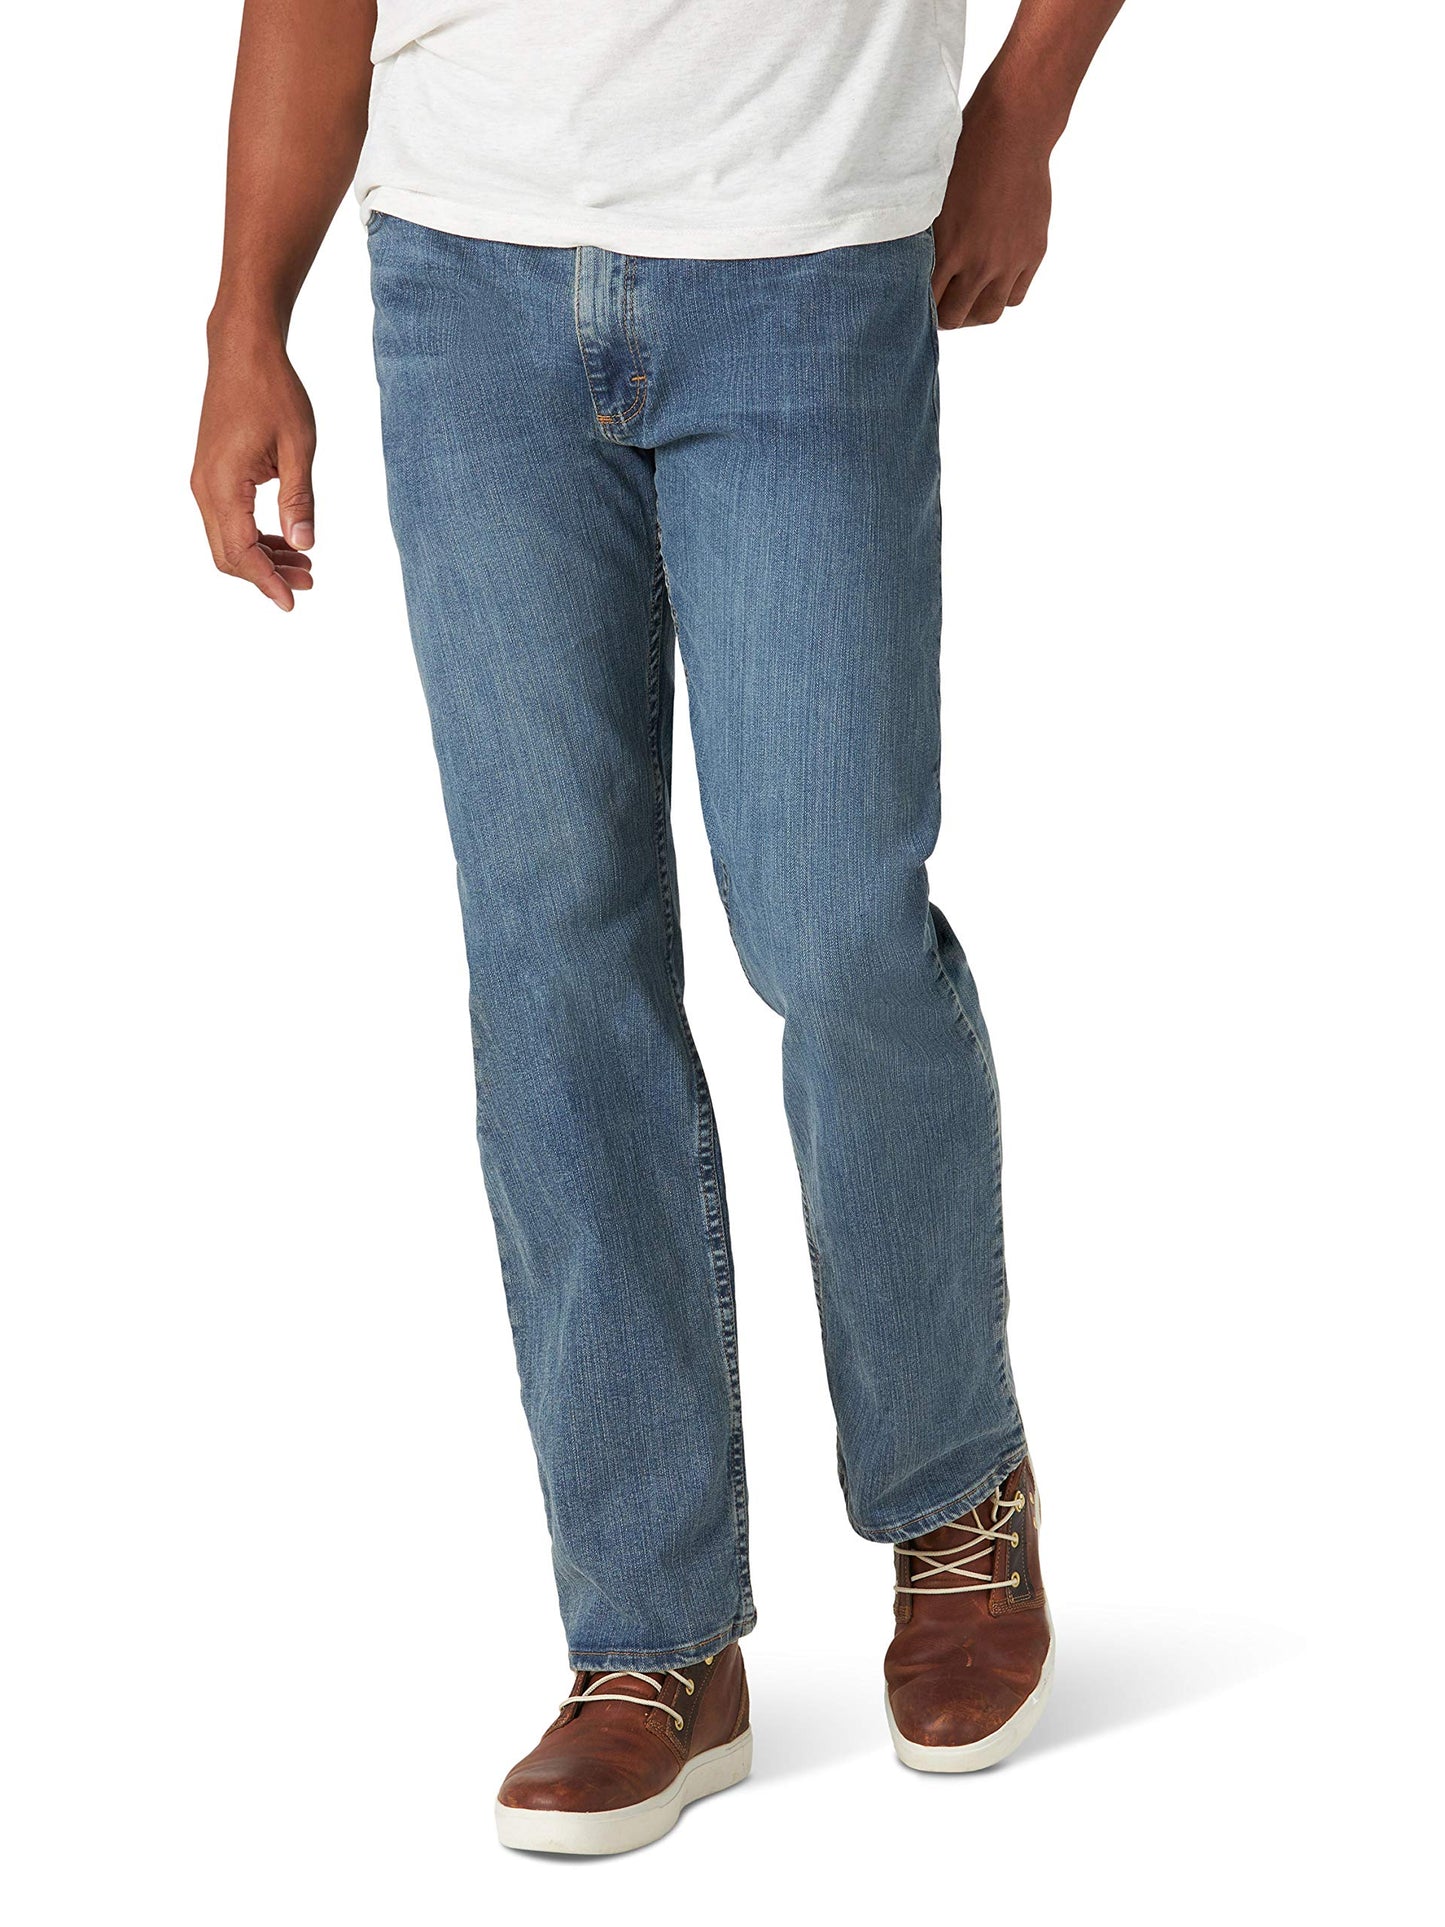 Wrangler Authentics Men's Regular Fit Comfort Flex Waist Jean, Slate, 36W x 34L